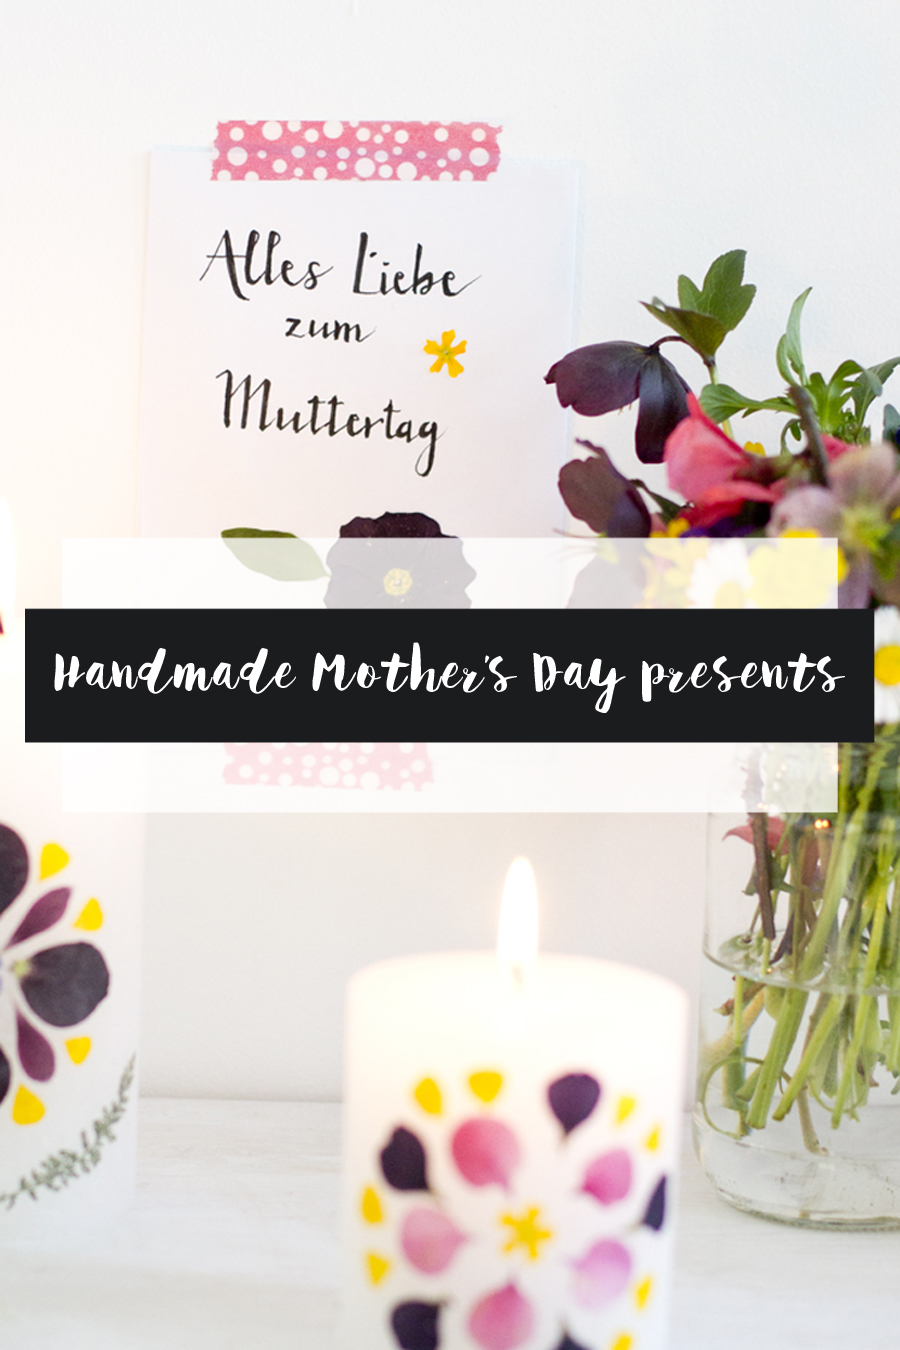 Handmade Mother's Day presents DIY ideas